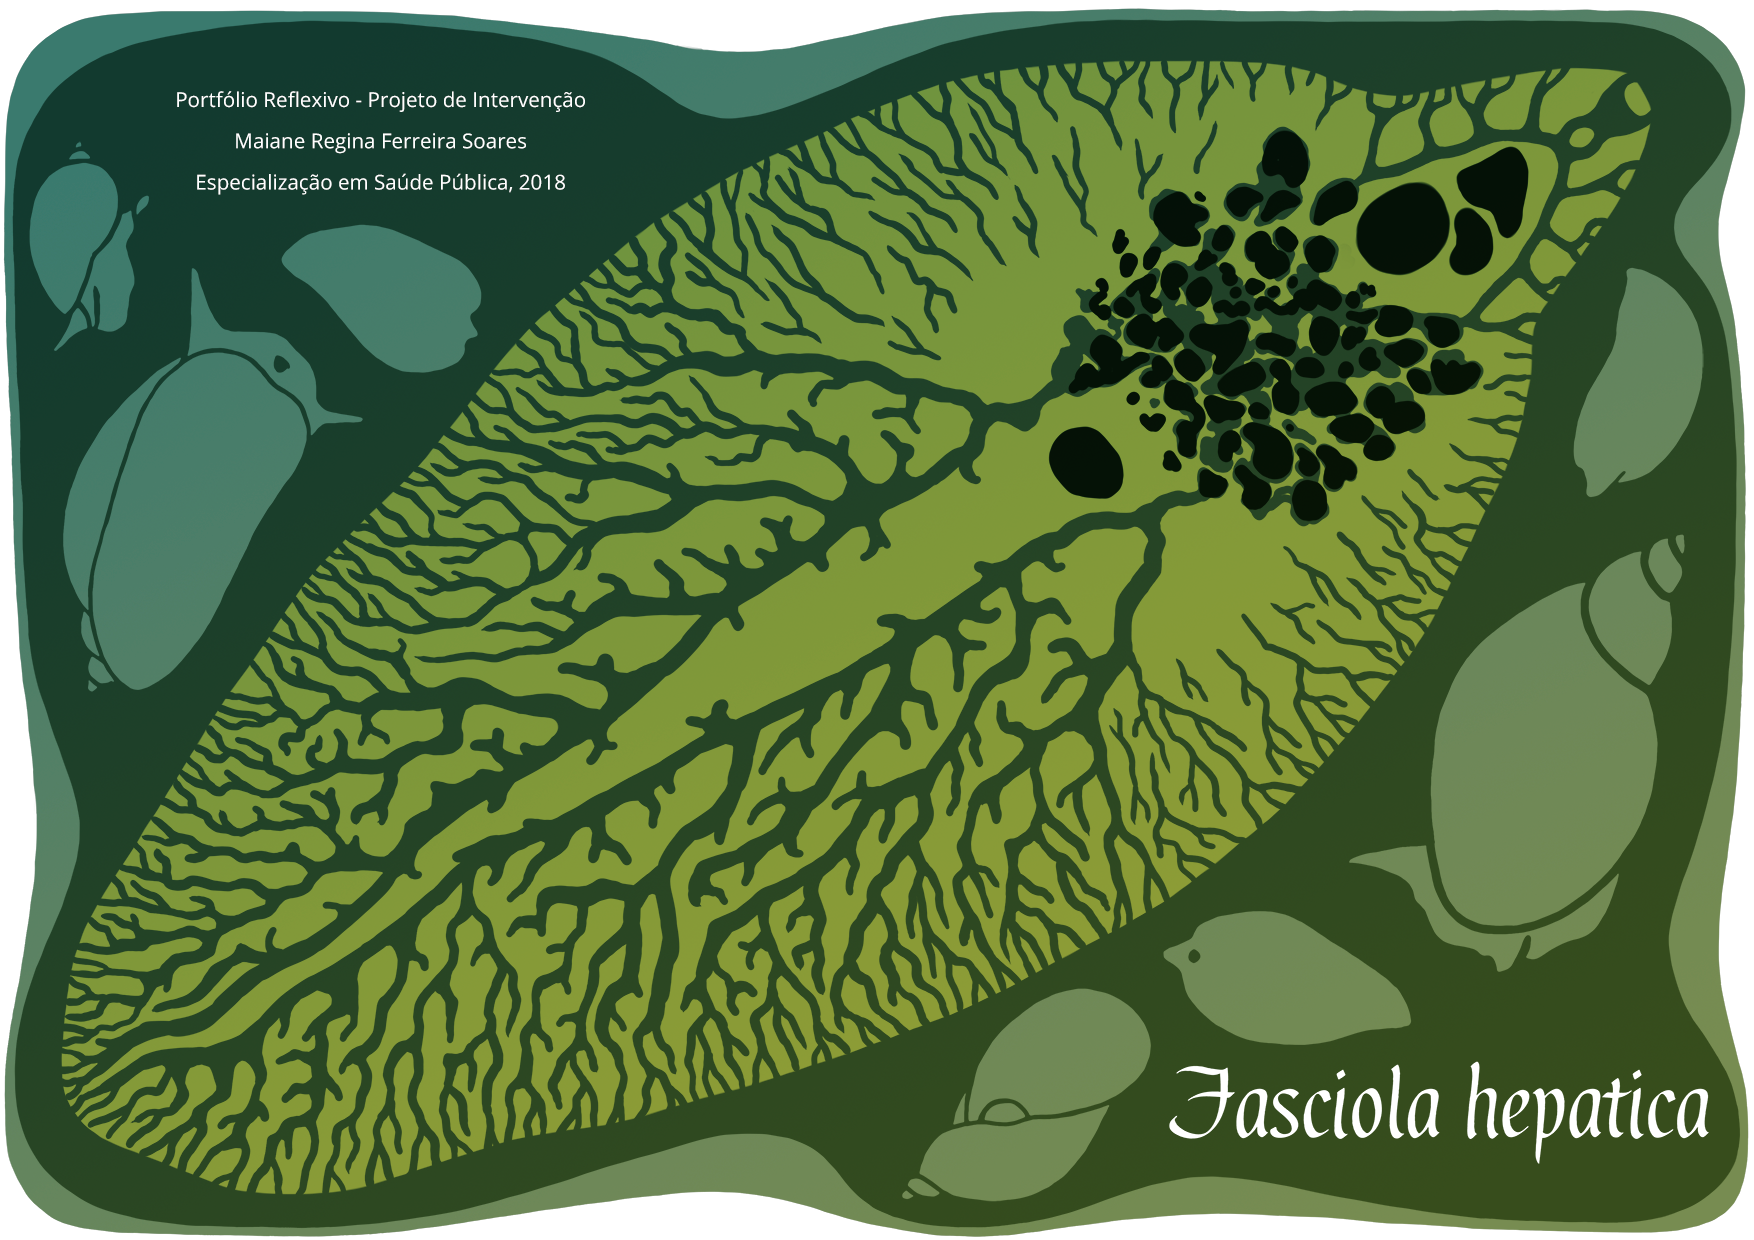 Parasite cover illustration